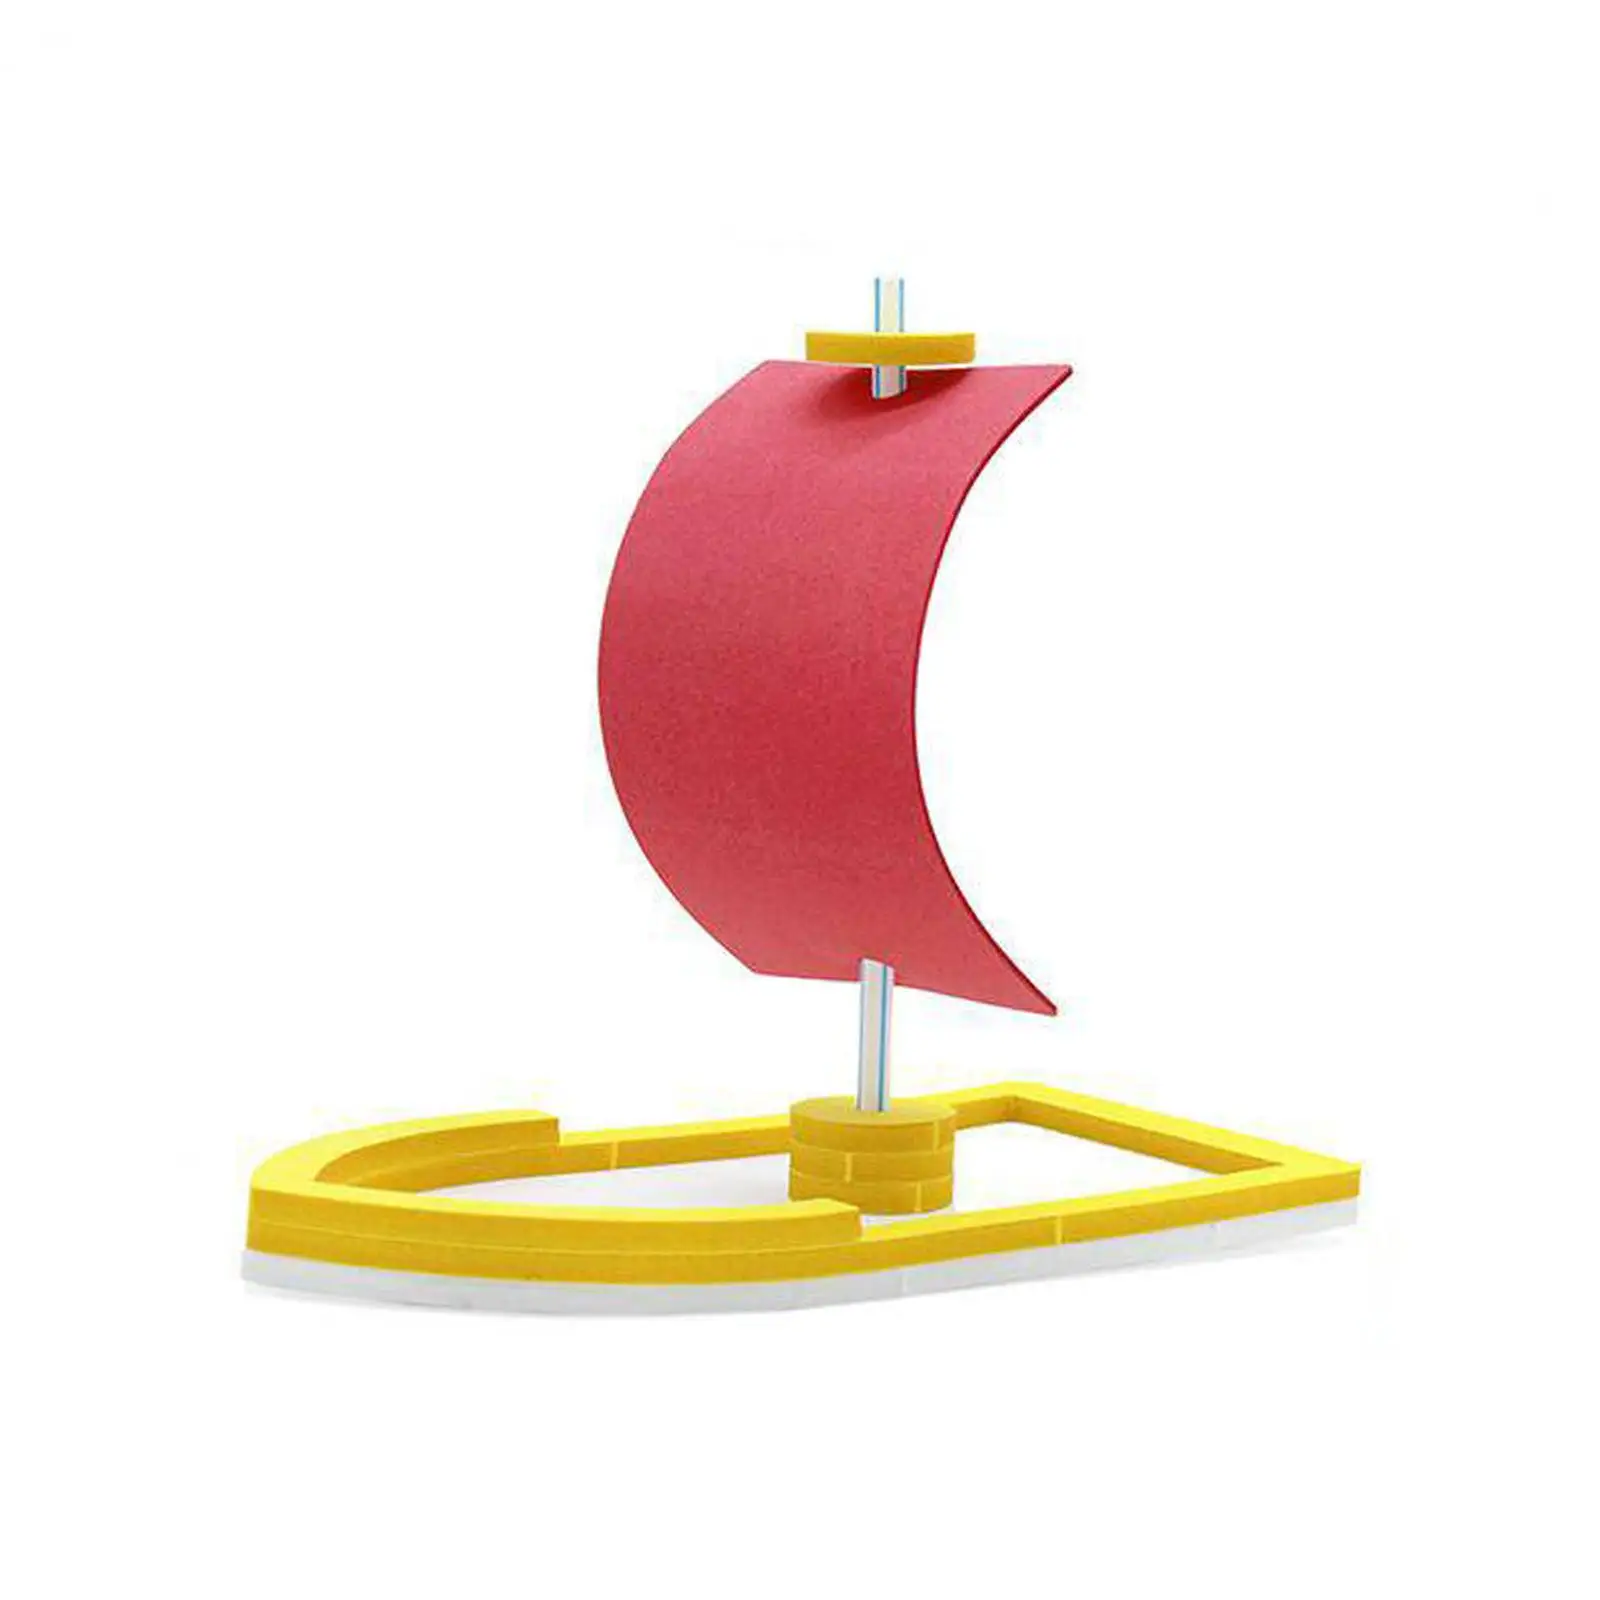 Creative 3D Sailing Ship Puzzle, Scientific Building Toy, Physics Novelty ,Stem